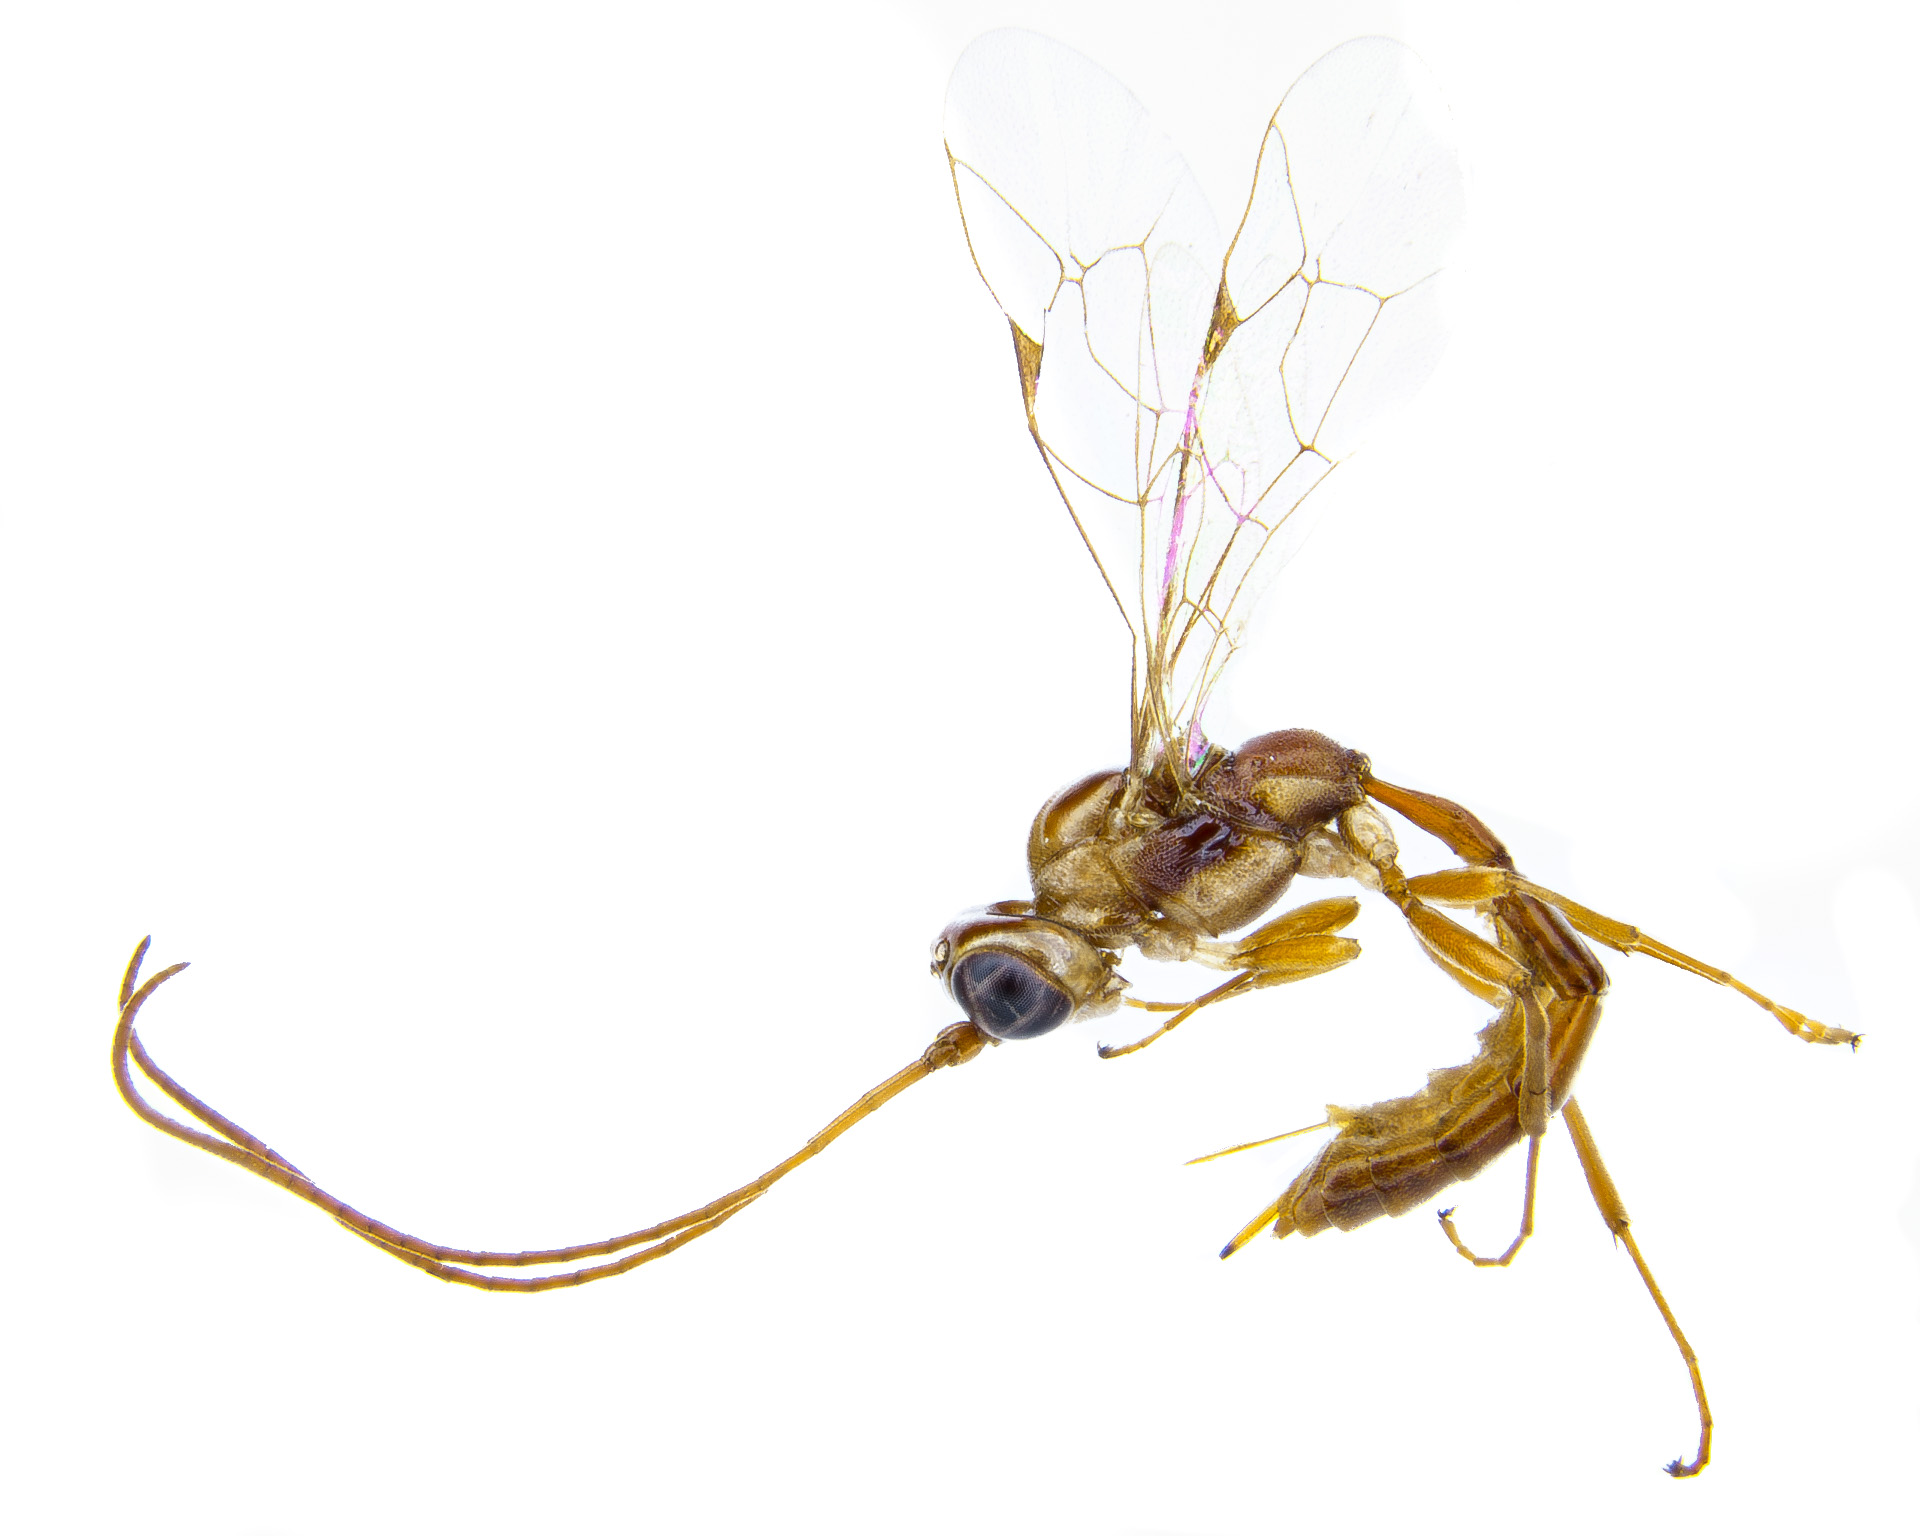 Quando viva, a vespa apresenta tons de preto e amarelo vivo. (Fonte: Wikimedia Commons/ Tom Saunders/Darren Ward)